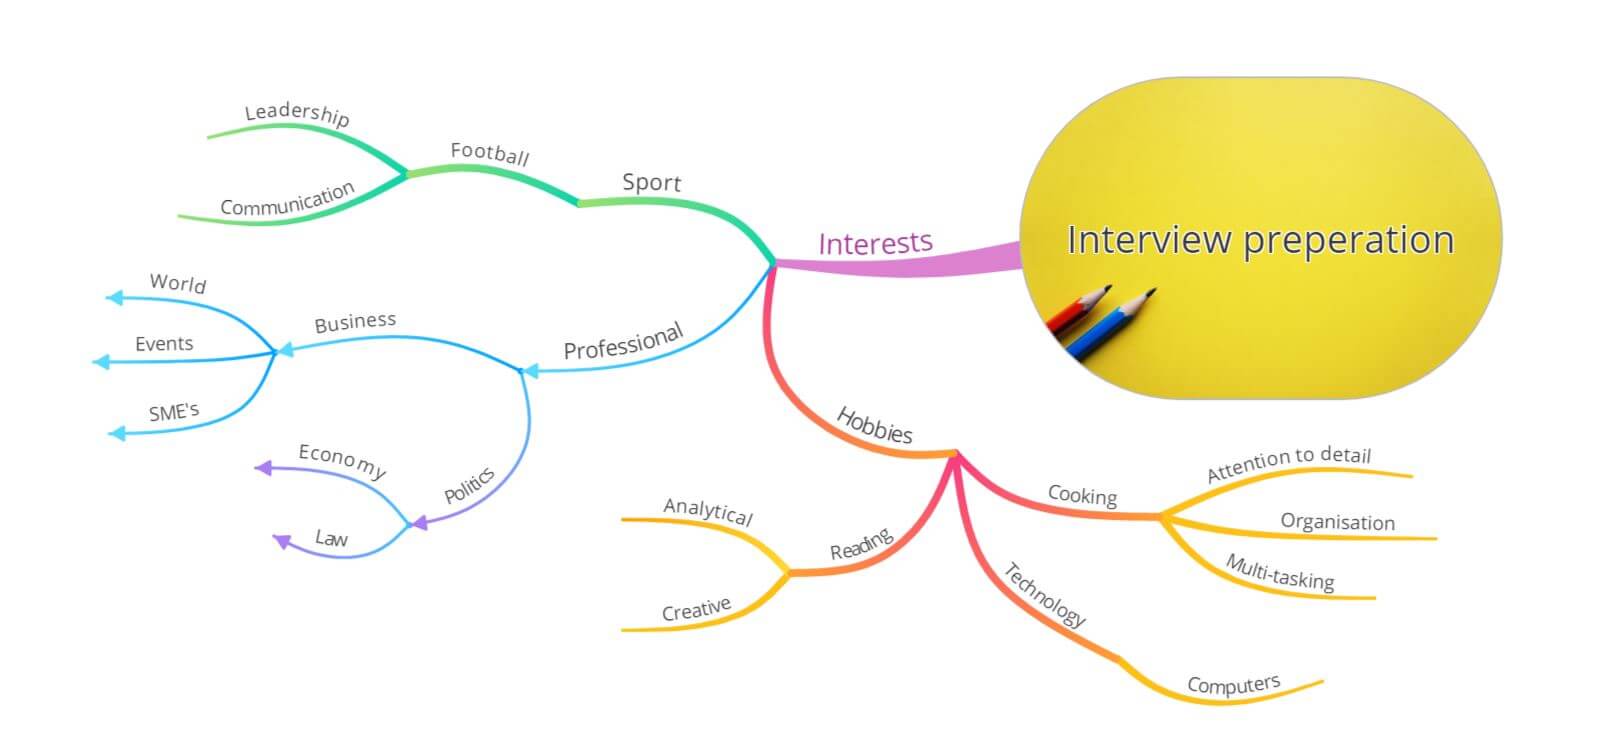 Interview preperation interests